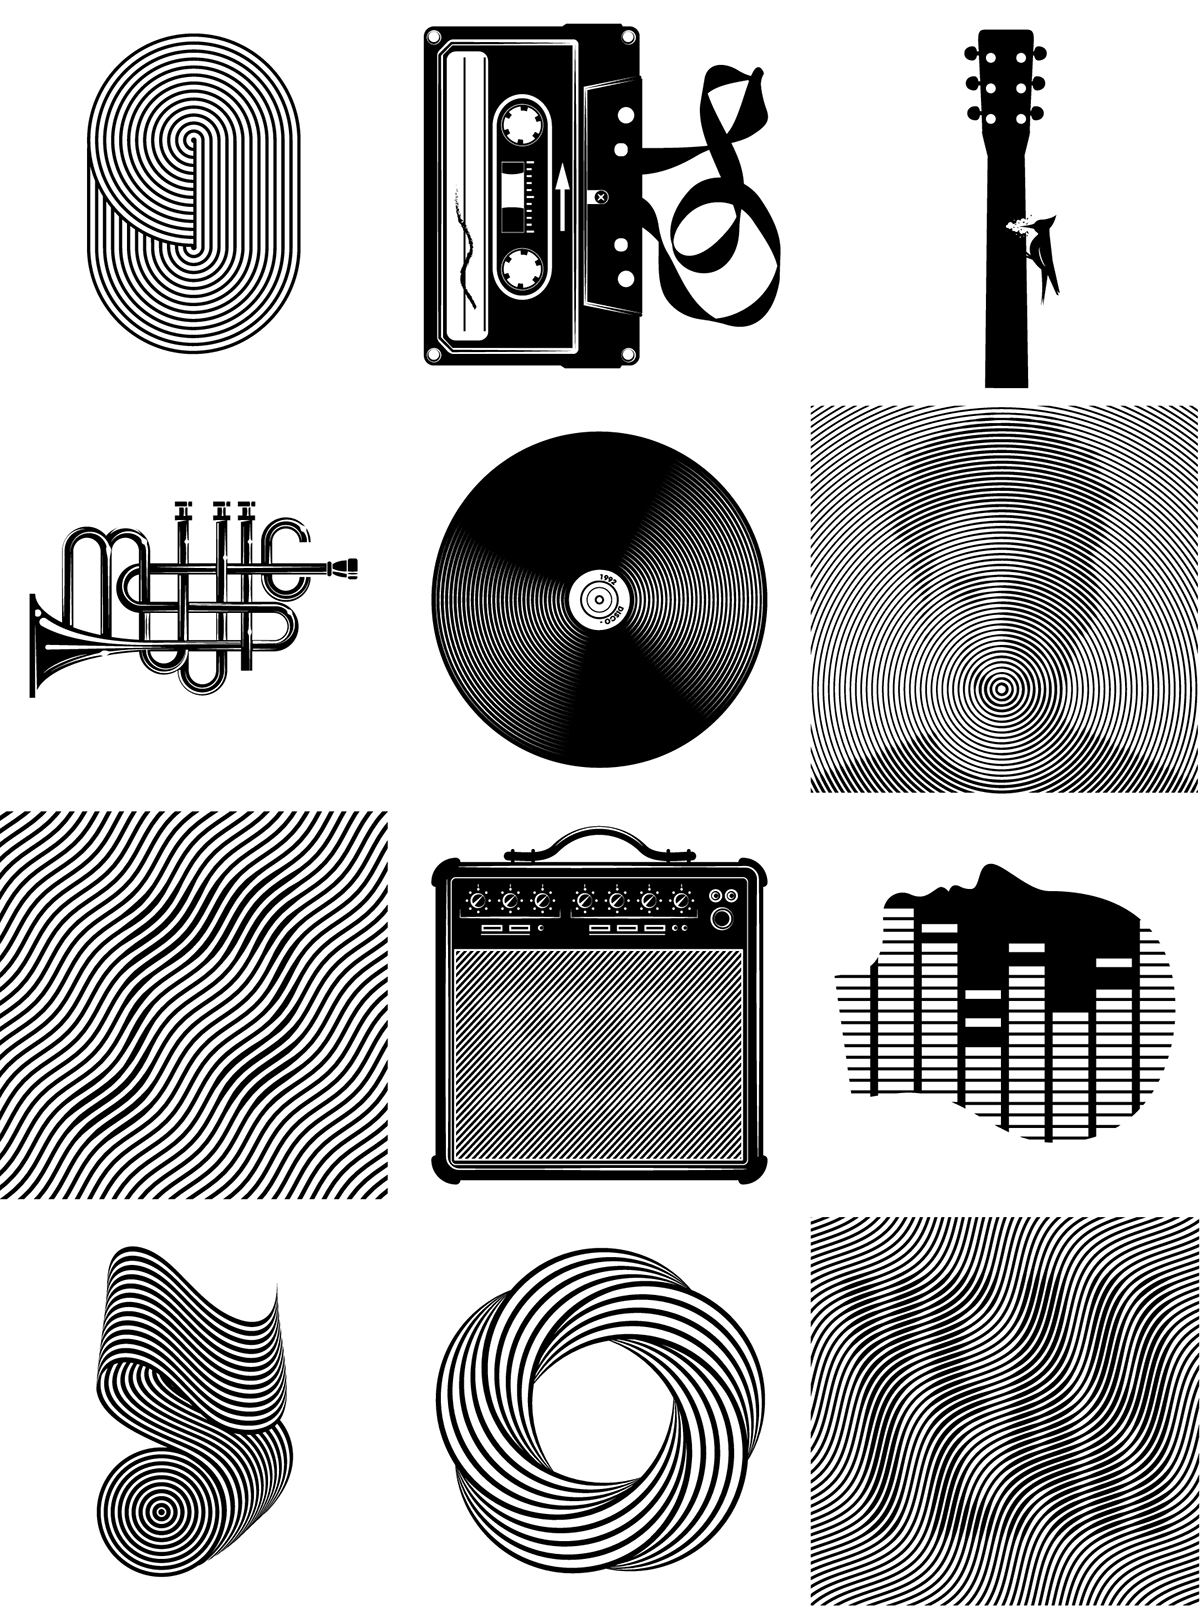 op art optical art musica song barcelona Urban outfitters shop sergi delgado design lettering type Illustrator London geometry